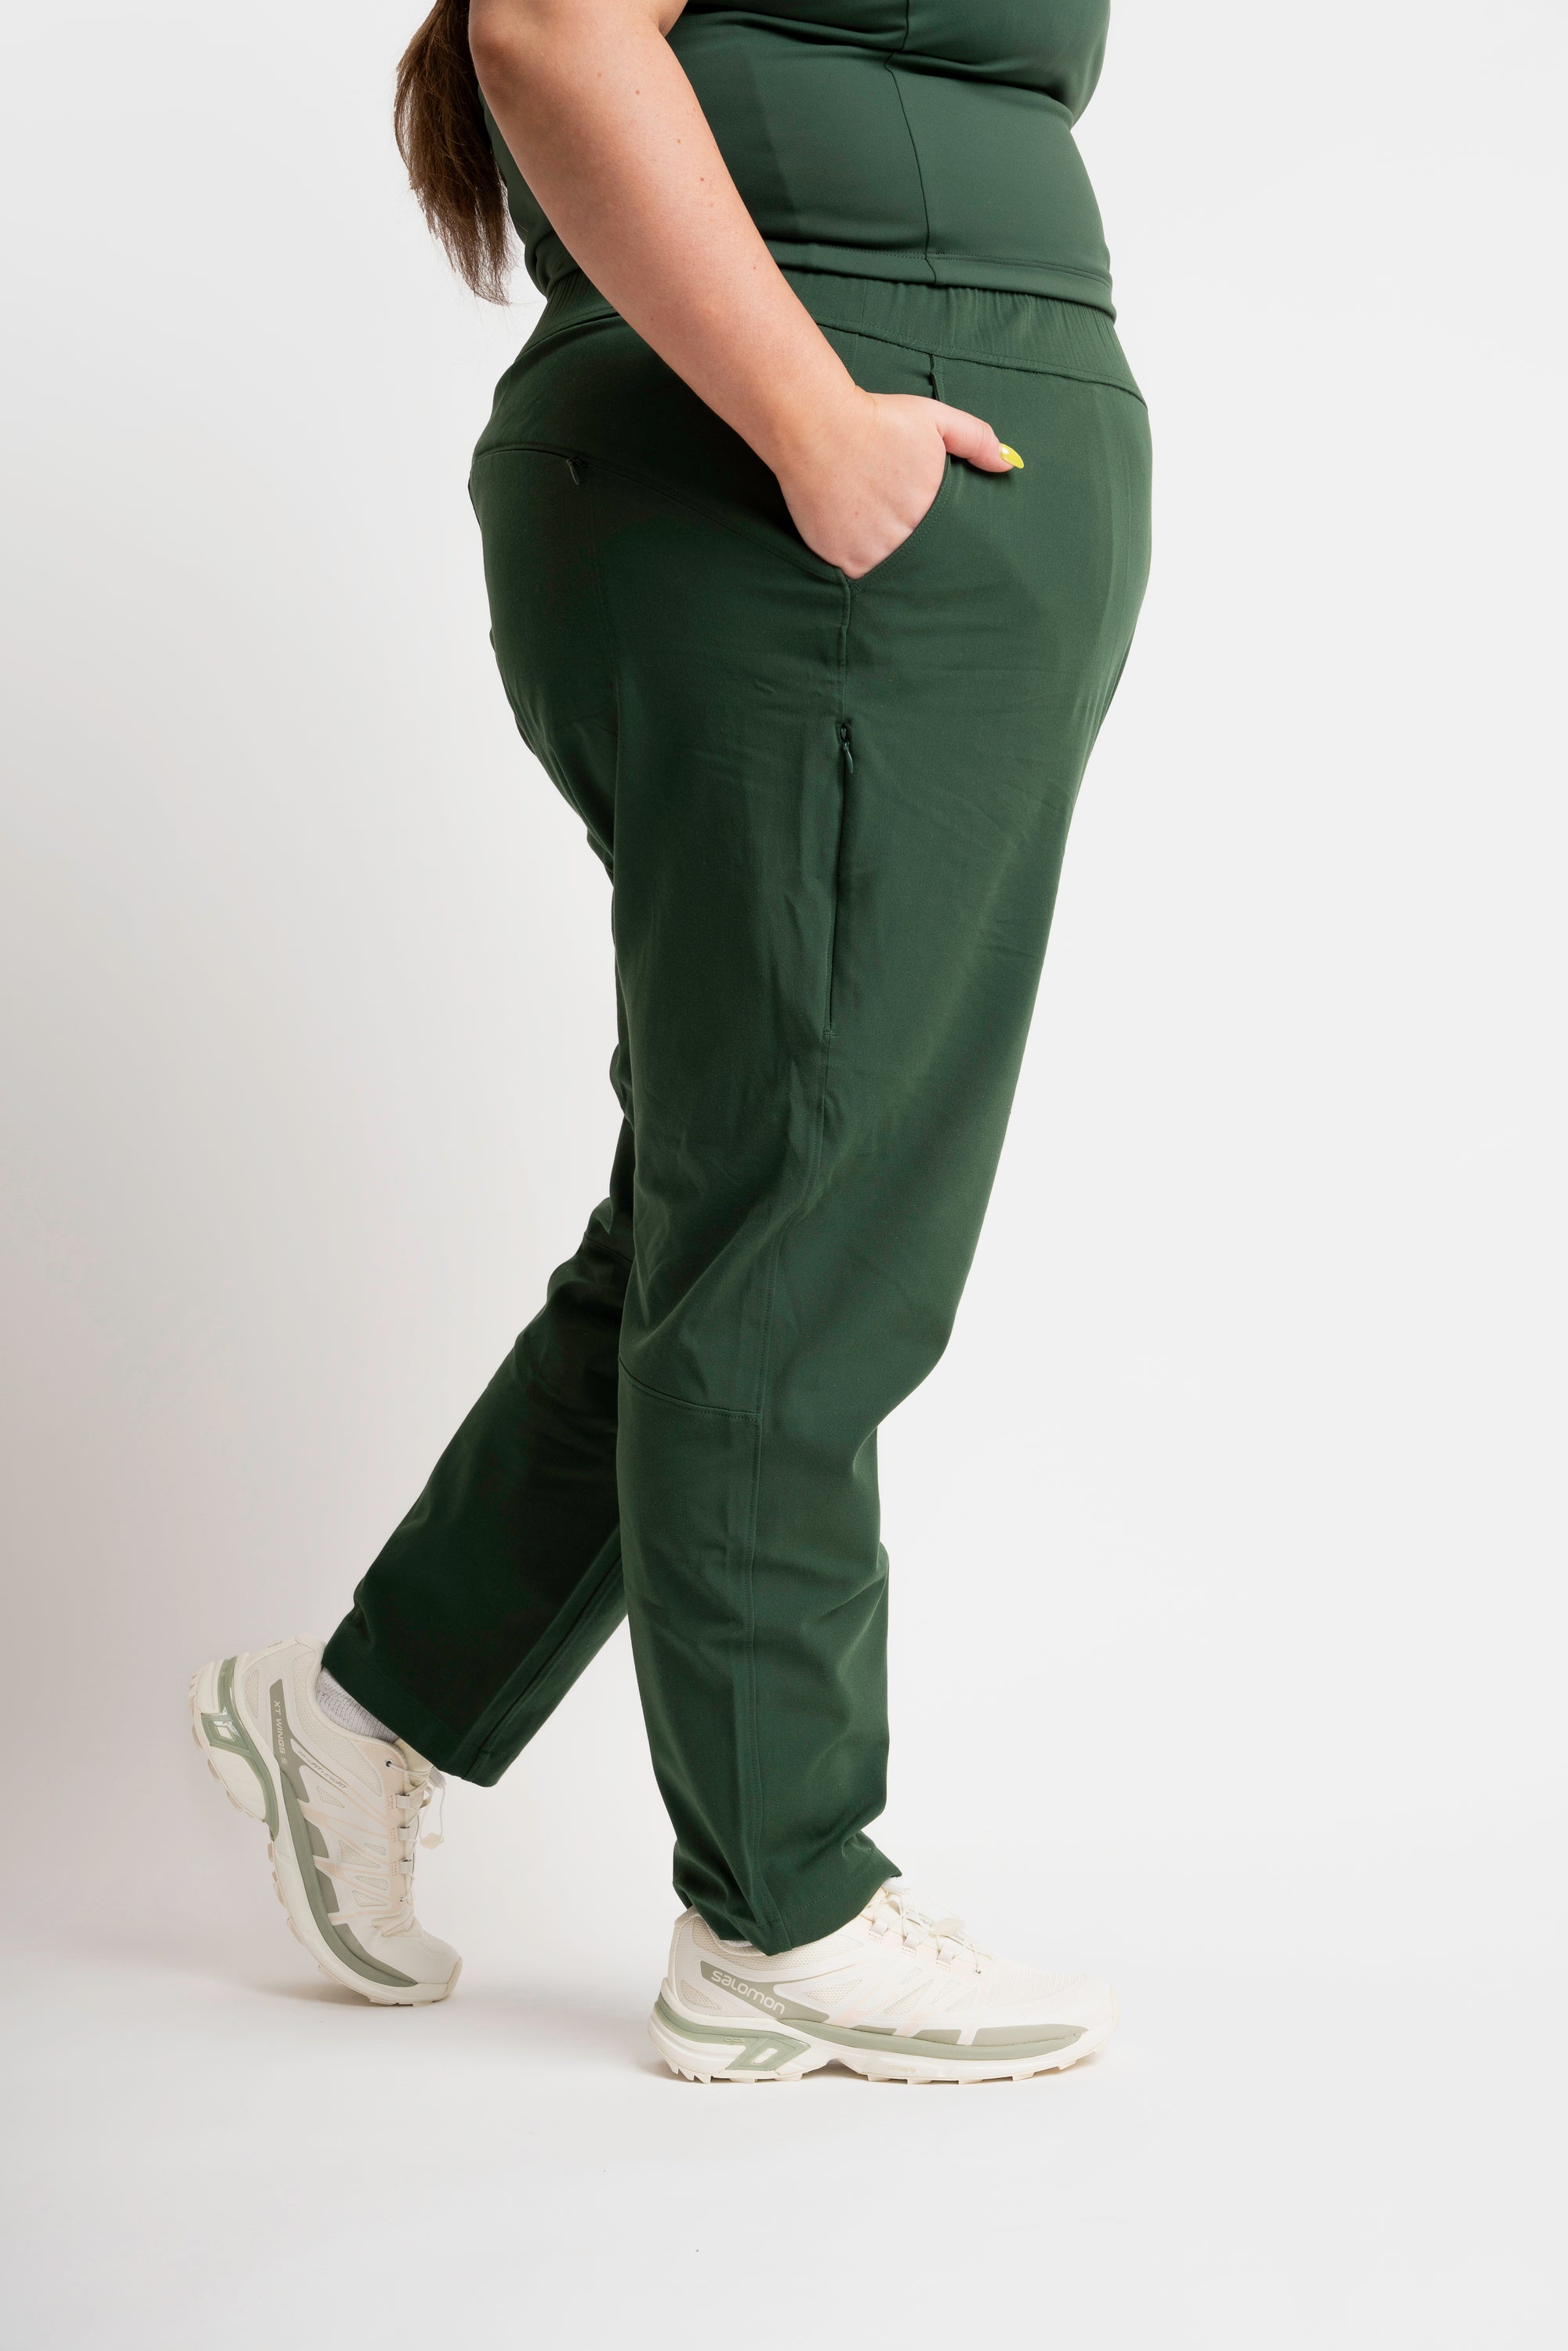 women's straight pant, Narrow Pant, XXL size waist with pocket